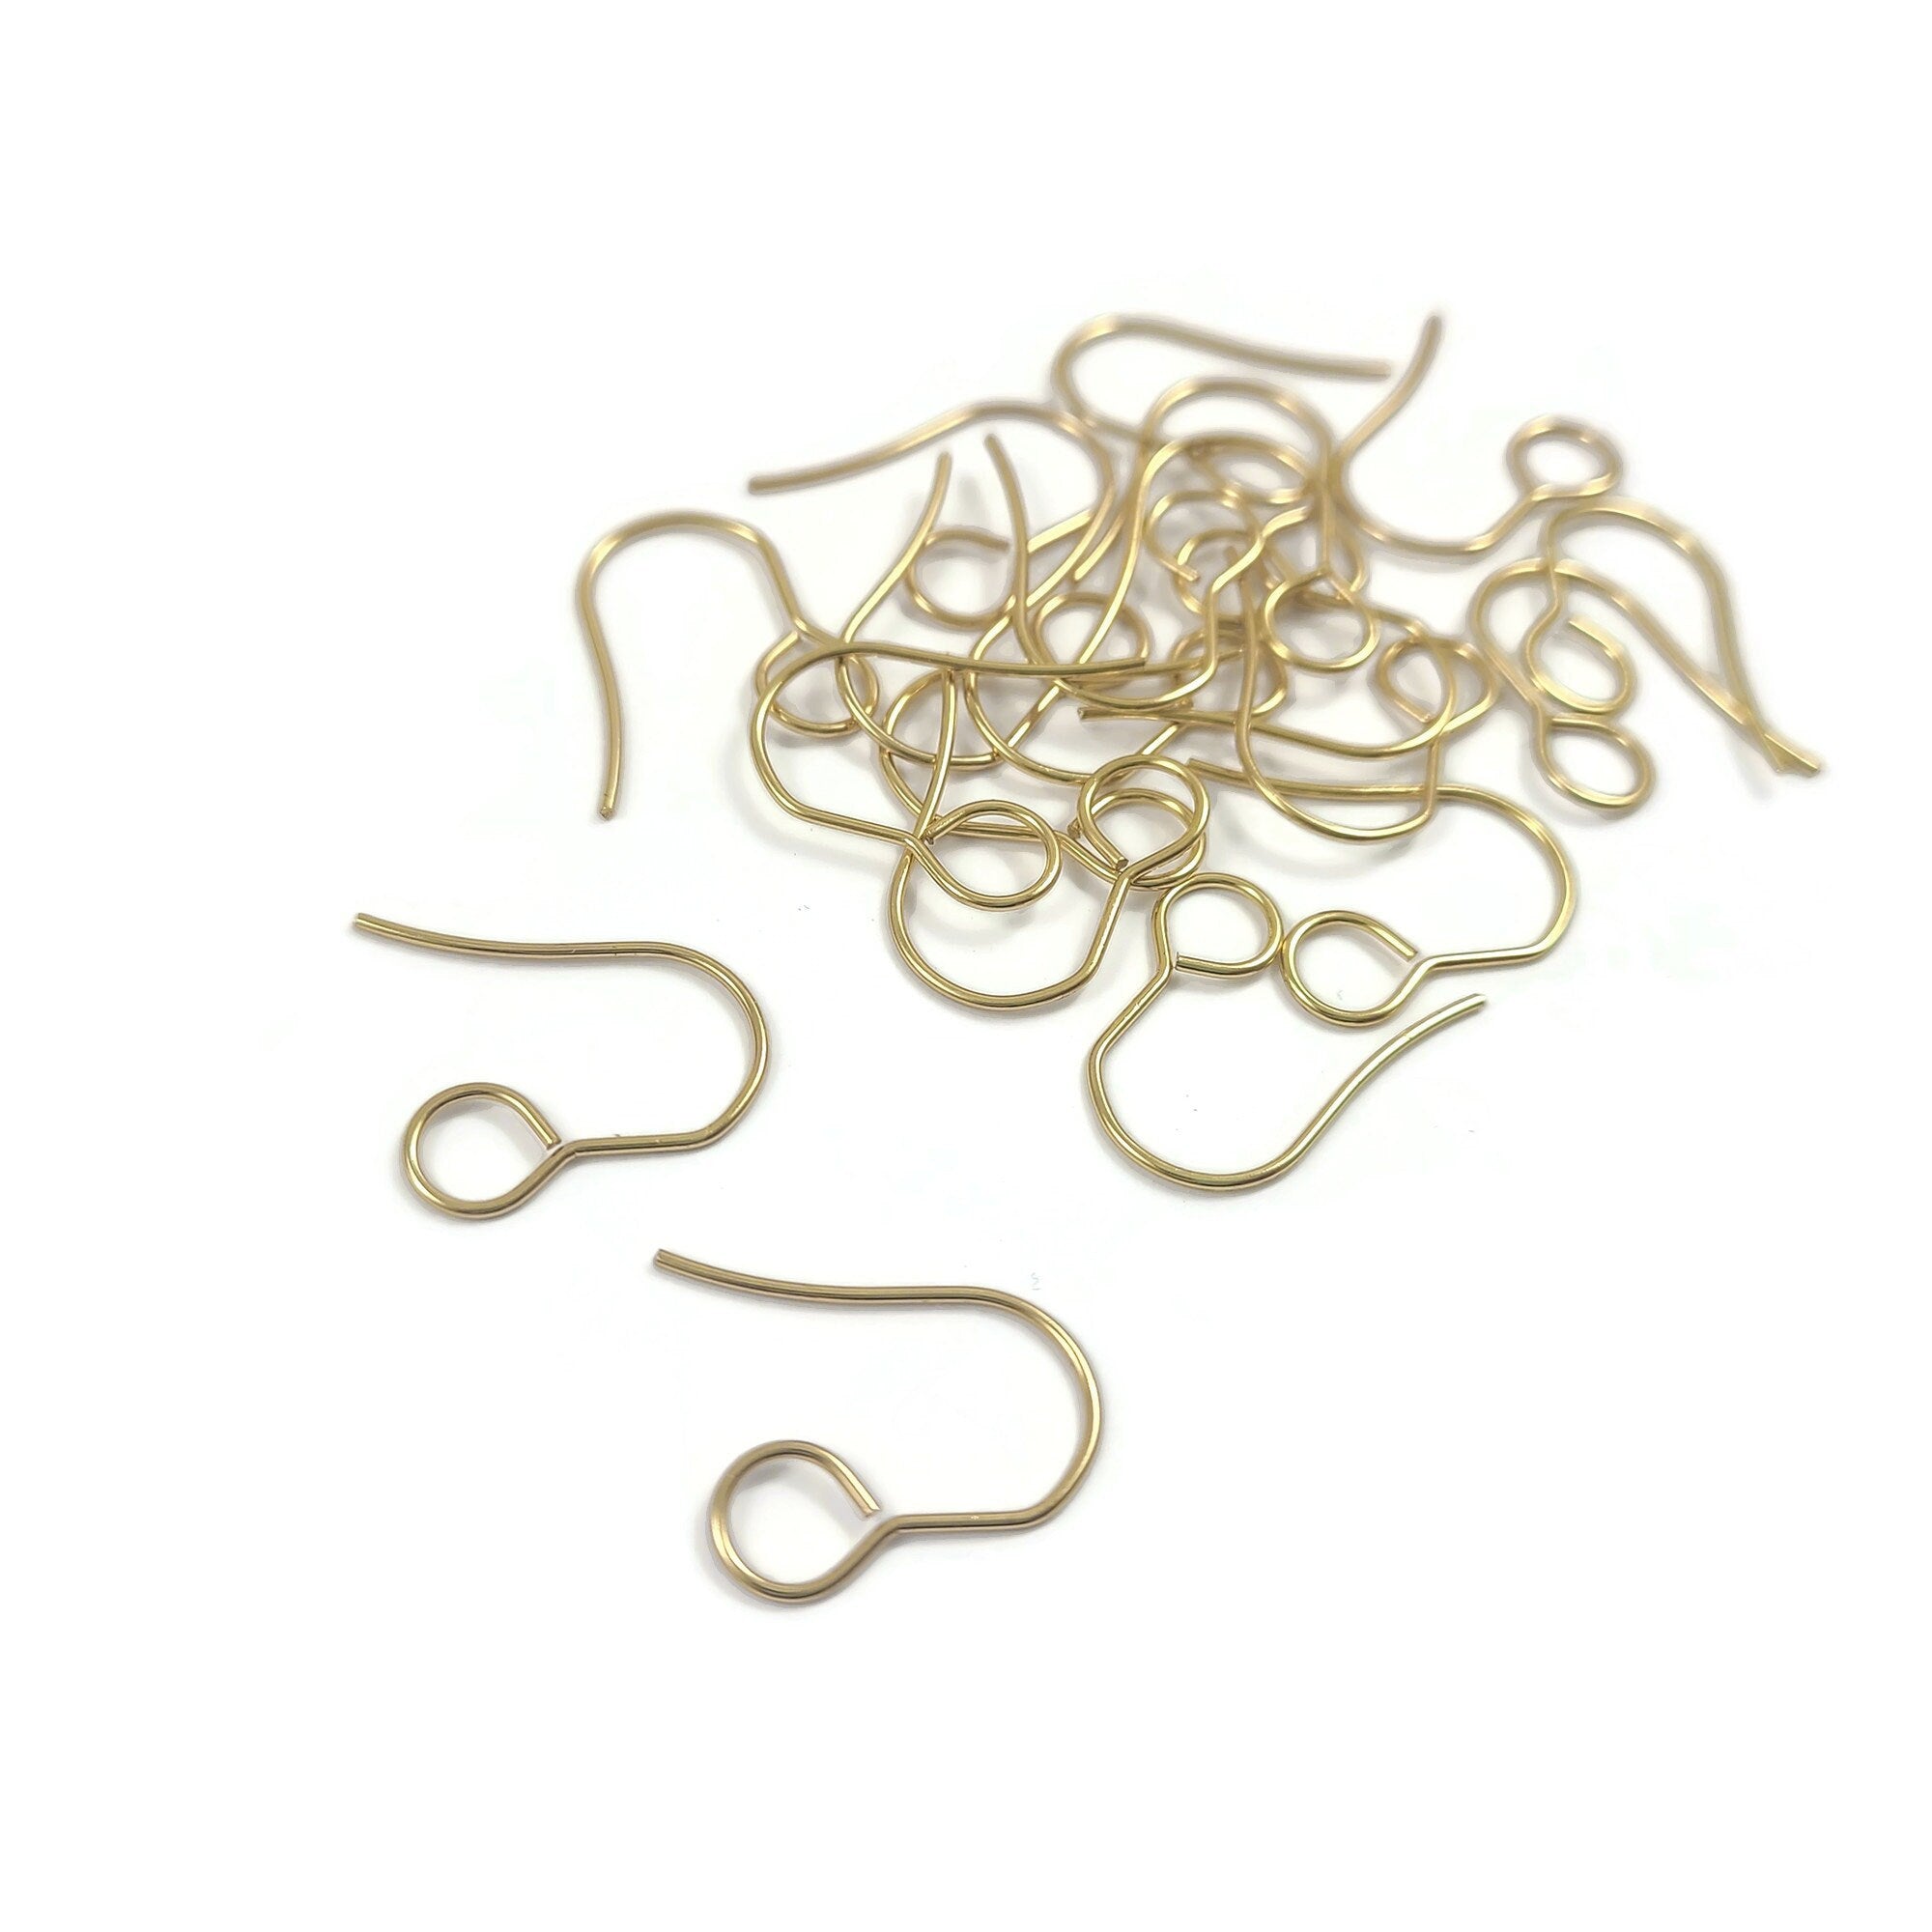 Wholesale SUPERFINDINGS 20Pcs Brass Earring Hooks Hypoallergenic